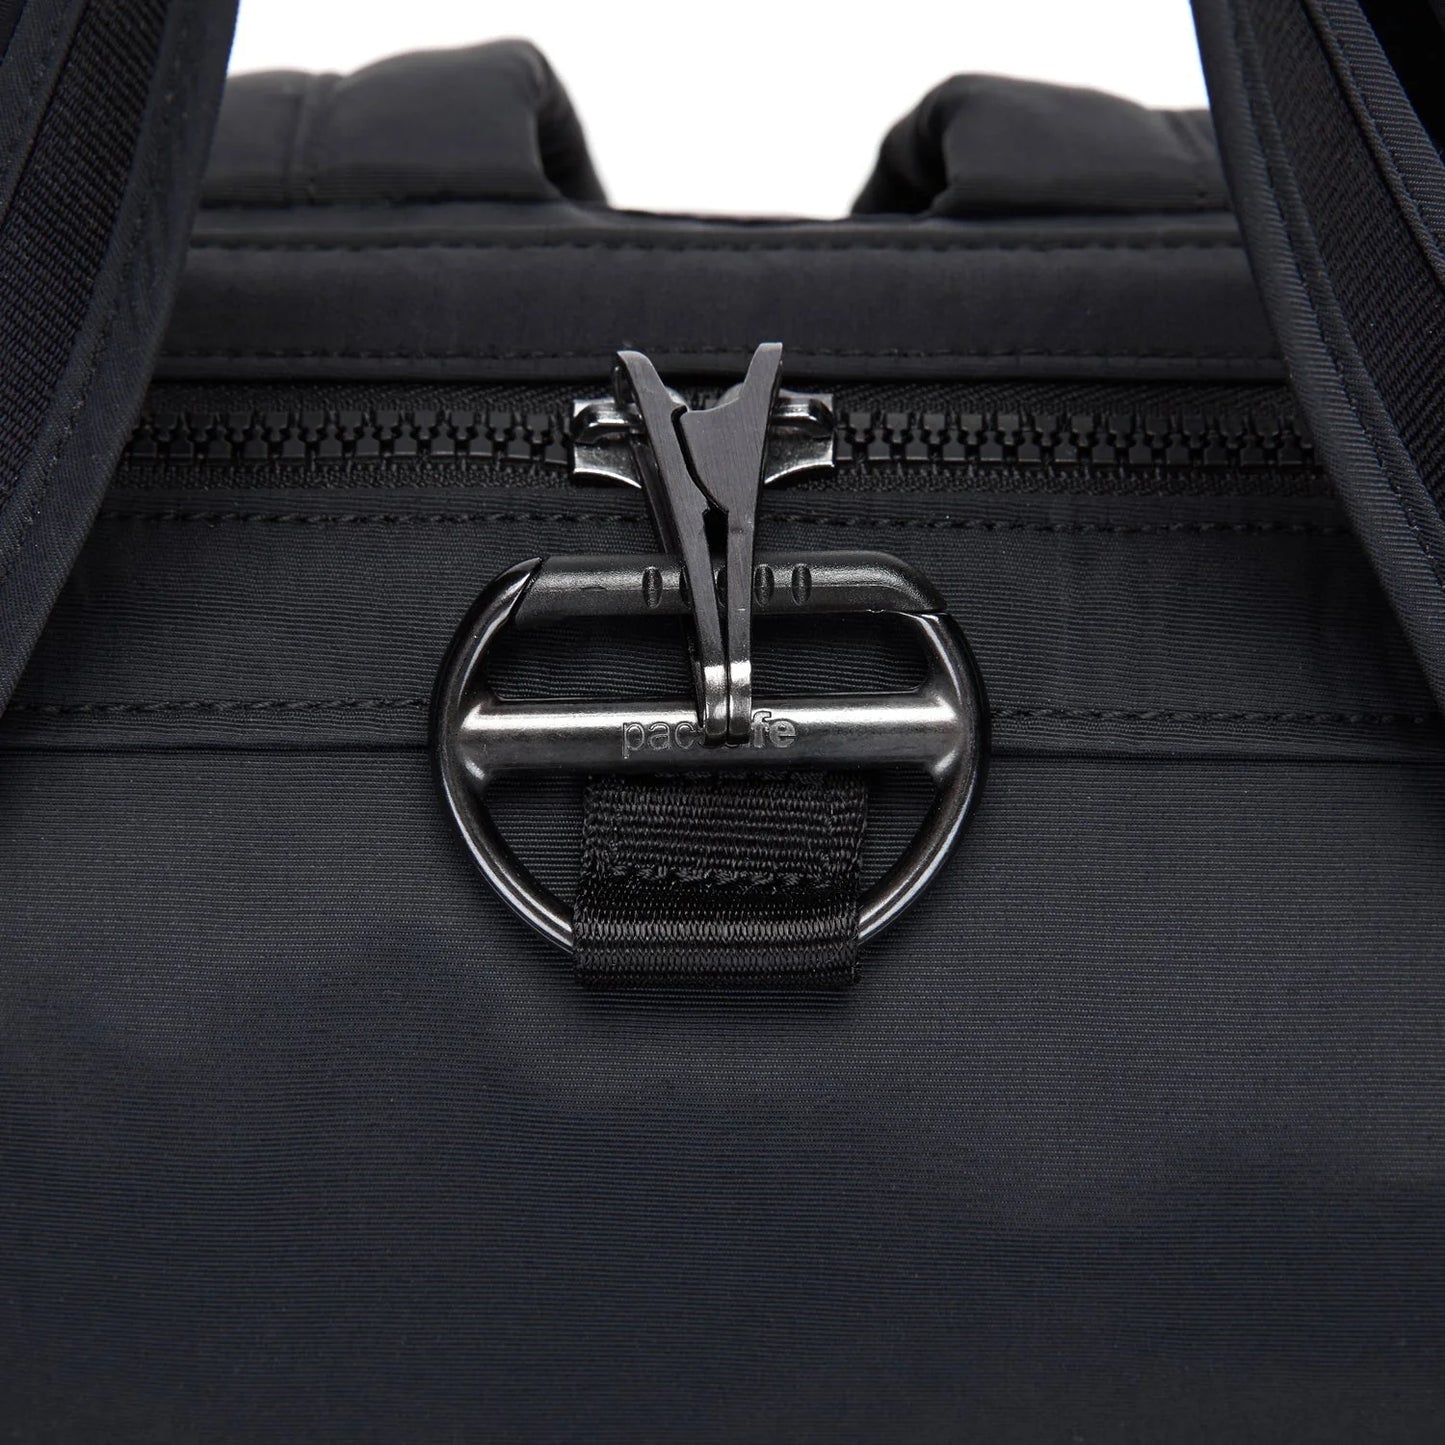 Pacsafe Citysafe CX Anti-Theft Backpack 17L